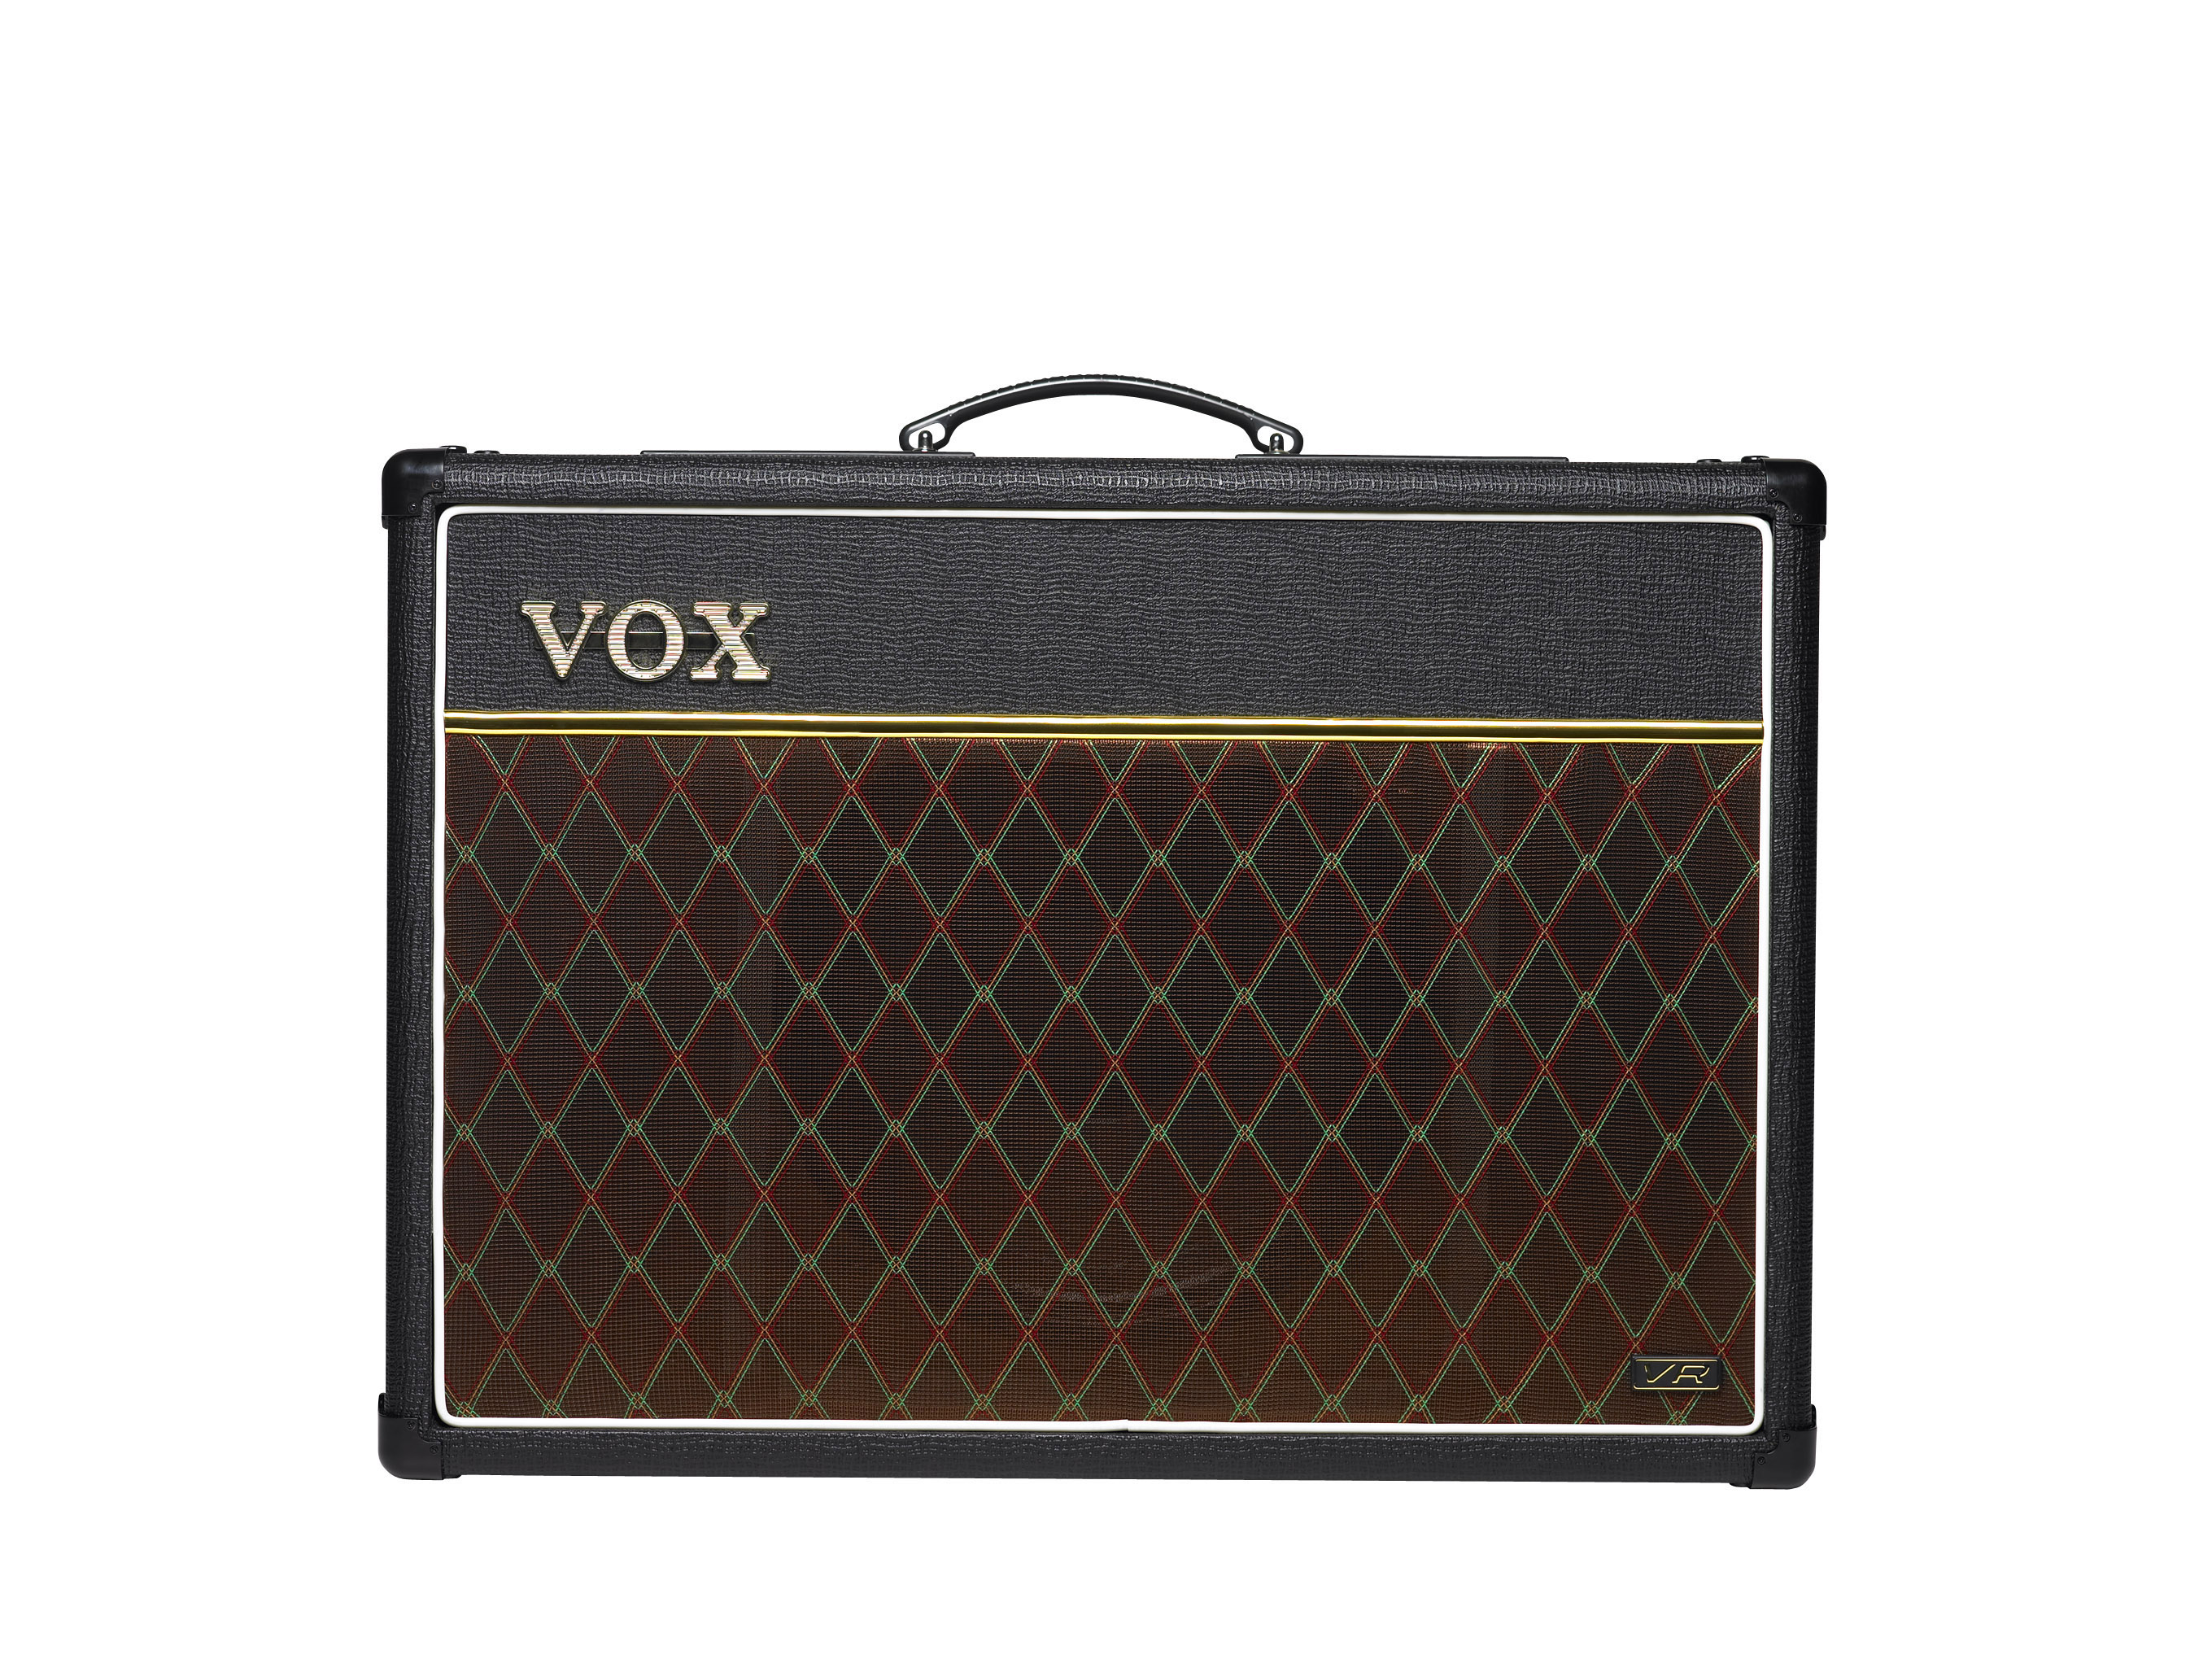 Vox Vox AC-15VR Valve Reactor Guitar Amp